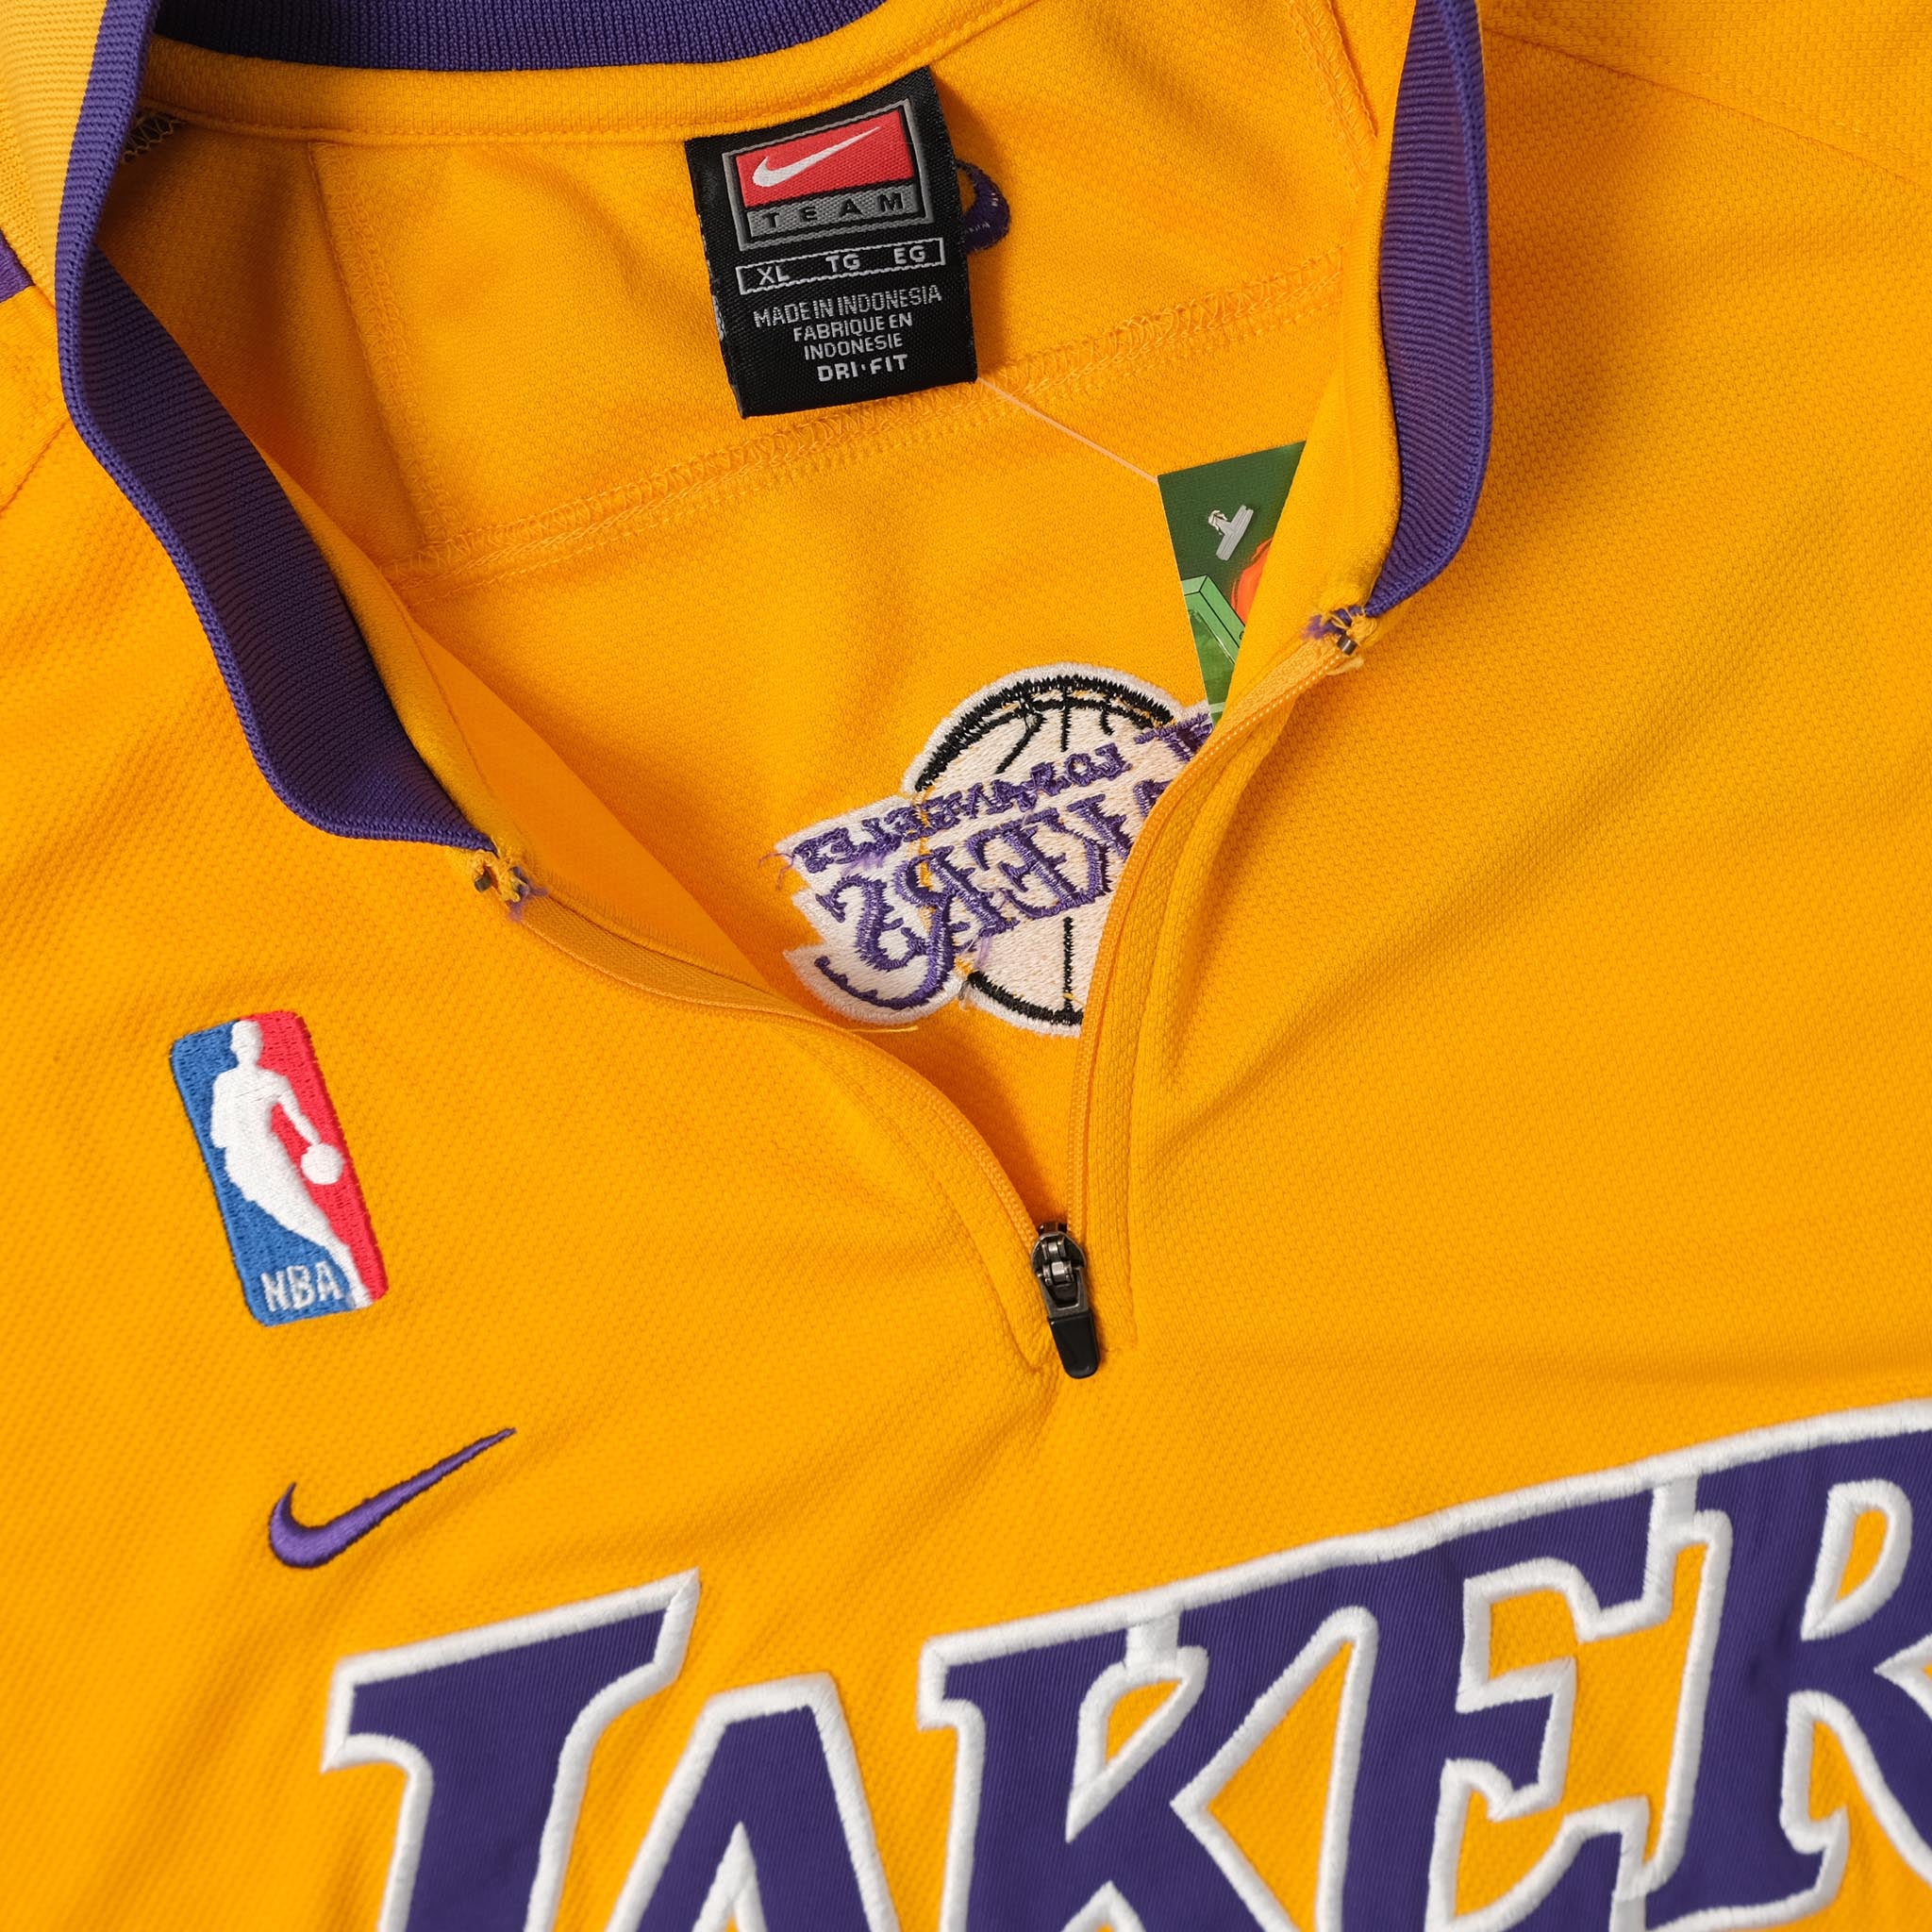 L] A Bathing Ape Bape Vintage Lakers Shooting Shirt Jersey –